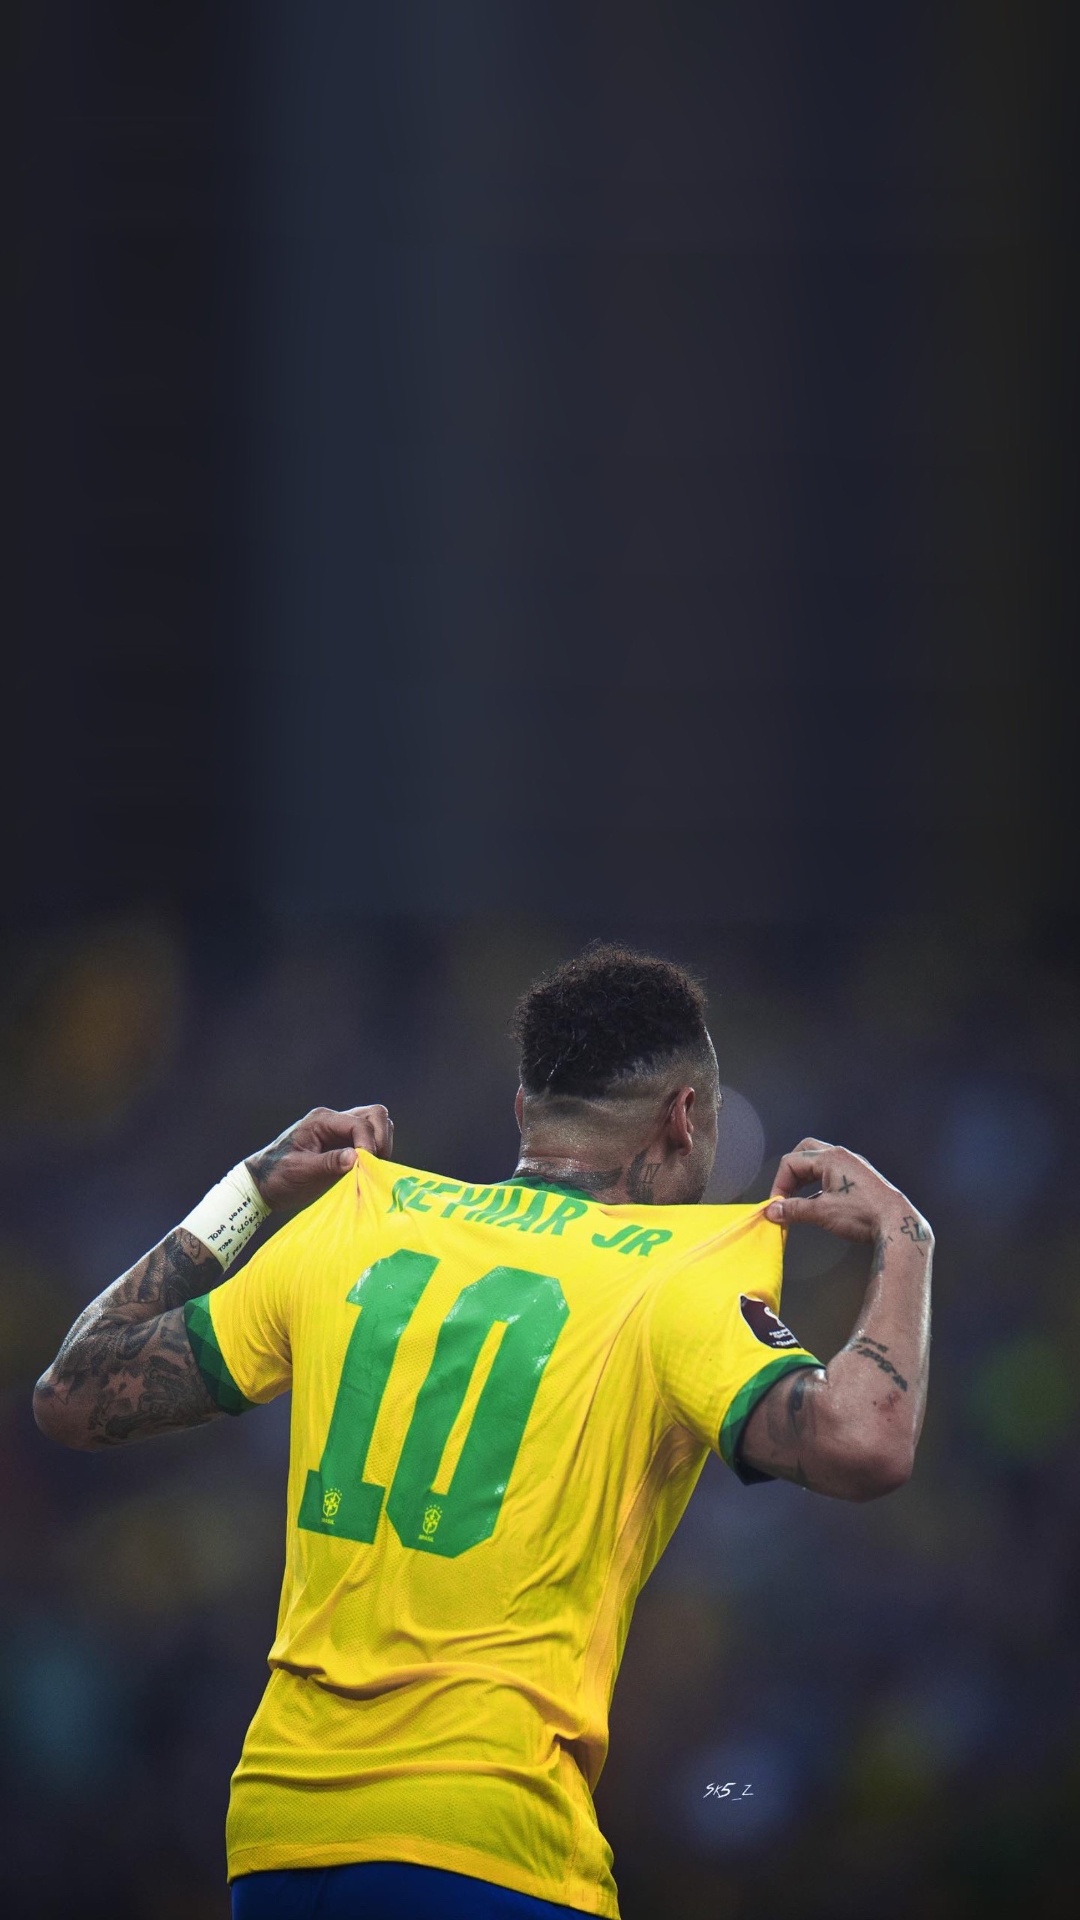 Neymar 2023 Wallpaper Neymar 2023 Wallpaper Download